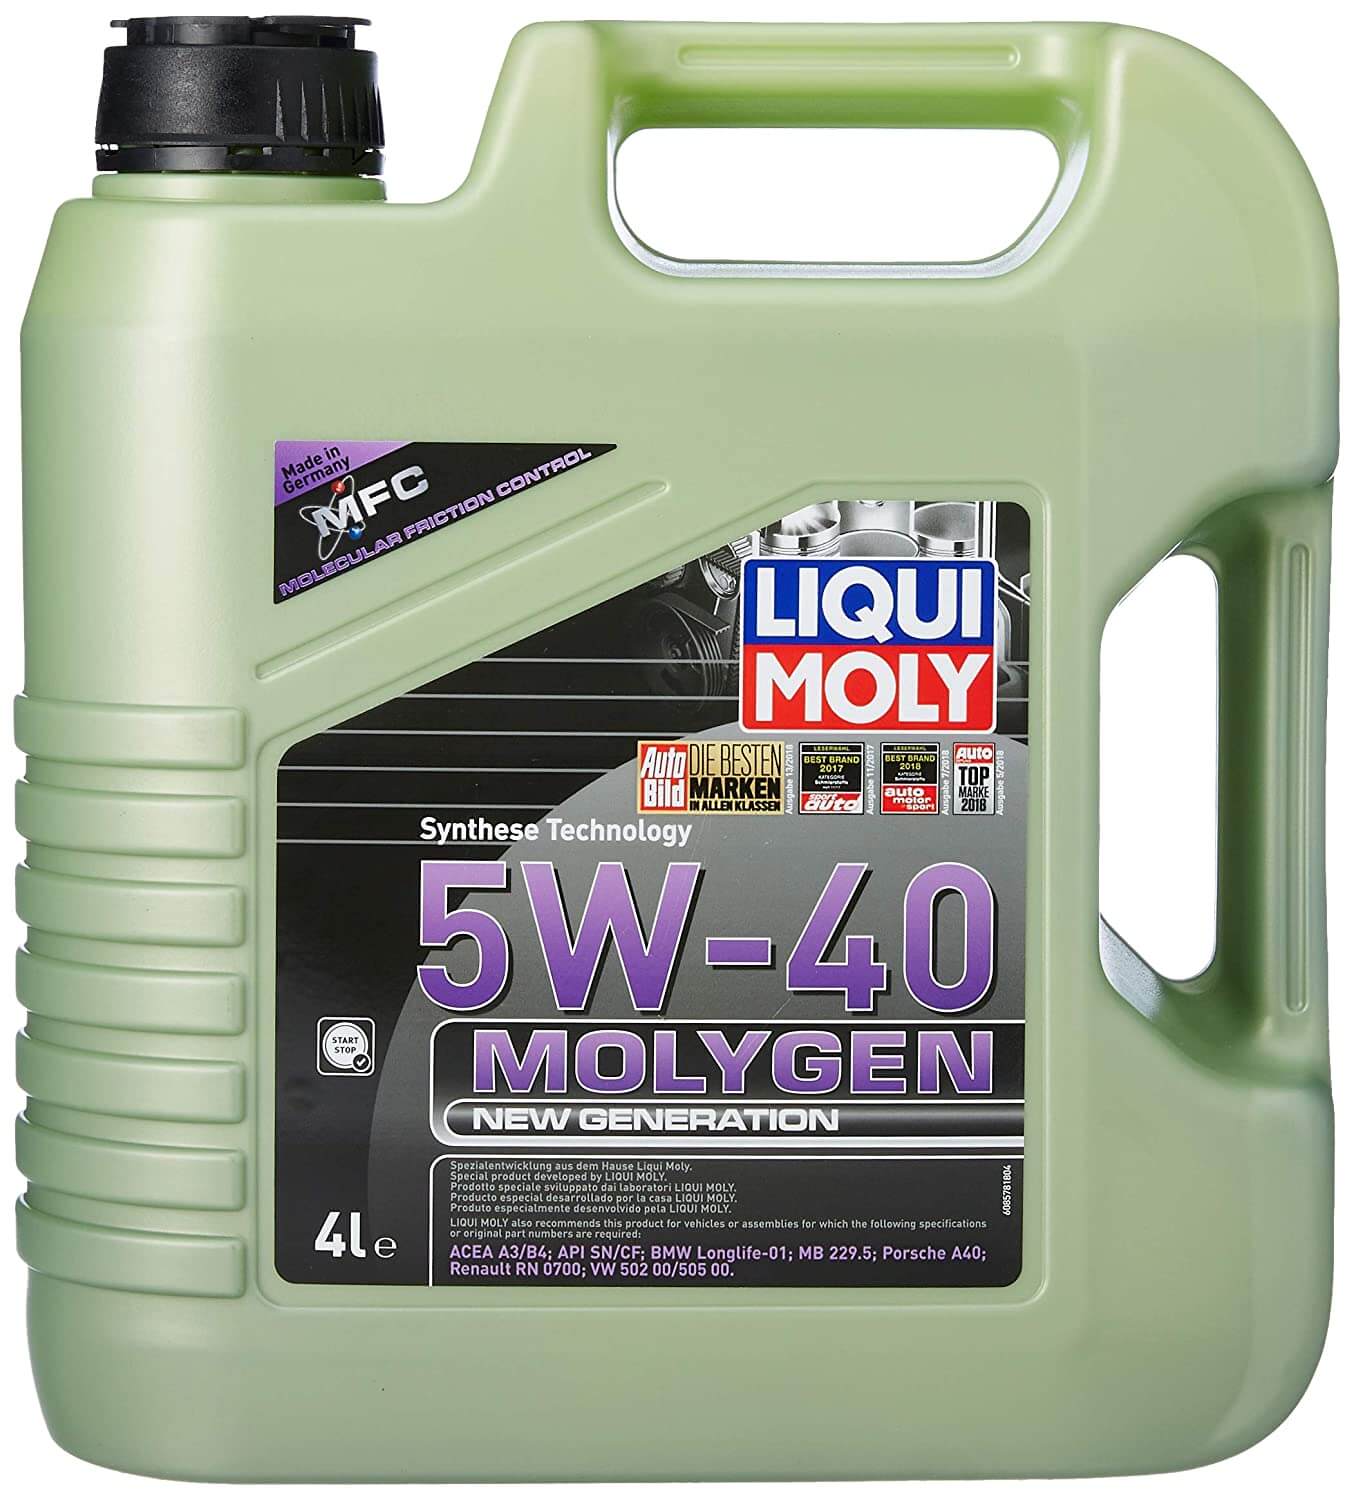 Liqui Moly Molygen New Generation 5W-40 Fully Synthetic Engine Oil, 4 Litre  – Industrial Supply Wholesaler B2B